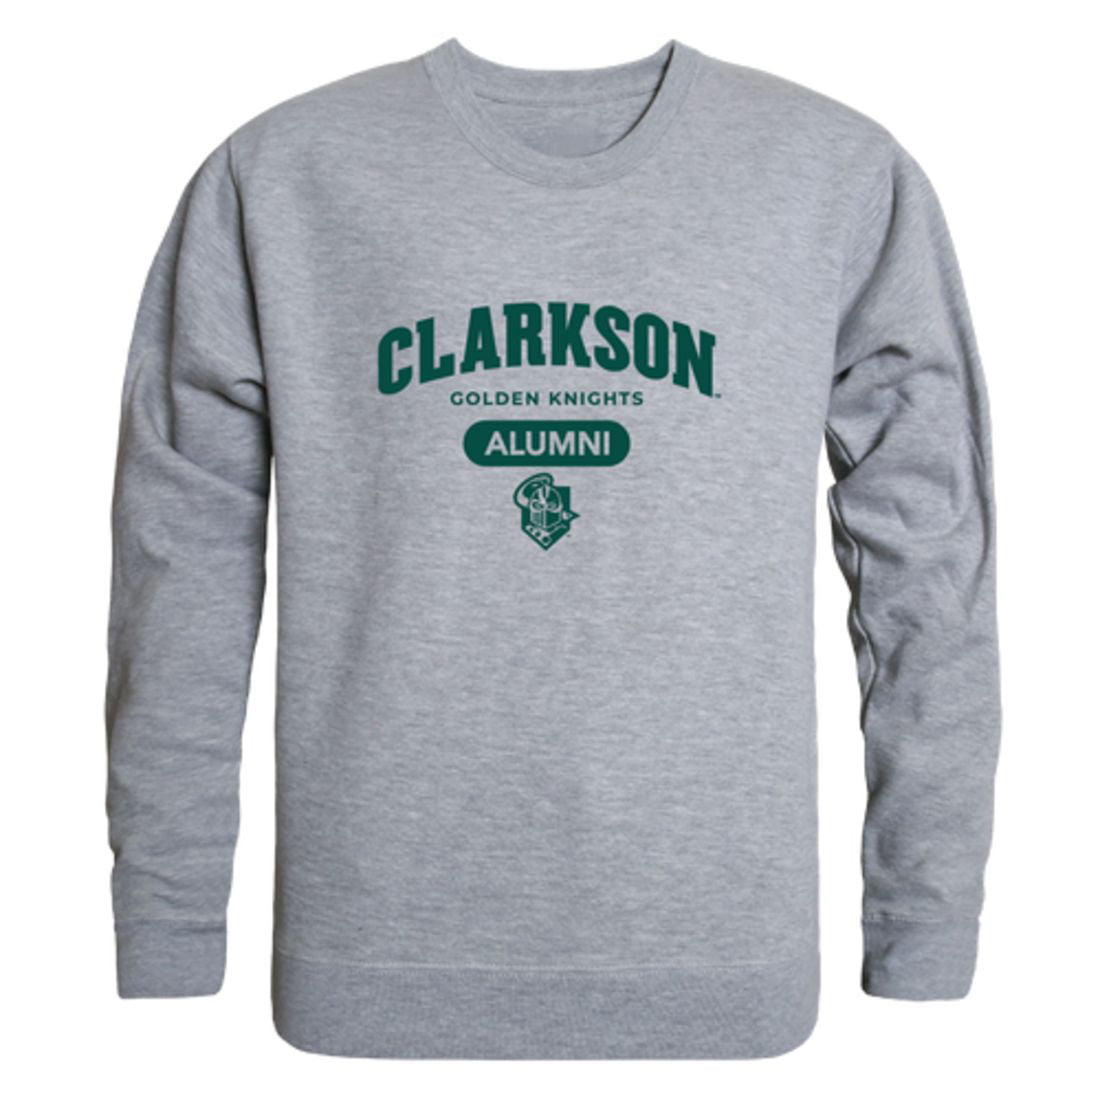 clarkson university sweatshirt